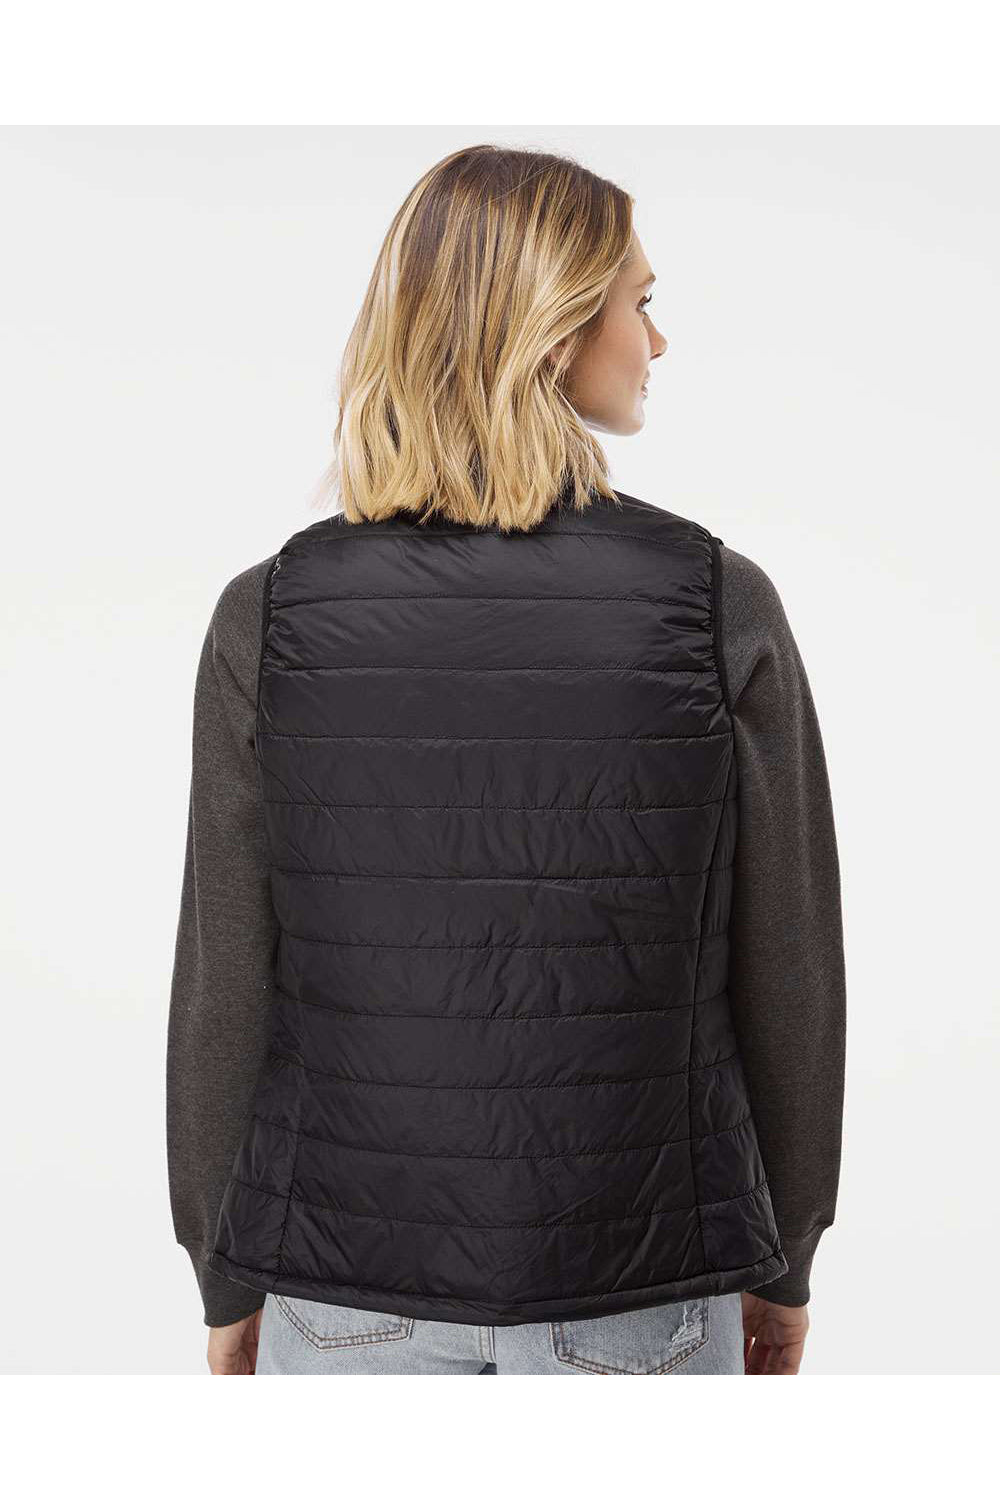 Independent Trading Co. EXP220PFV Womens Full Zip Puffer Vest Black Model Back